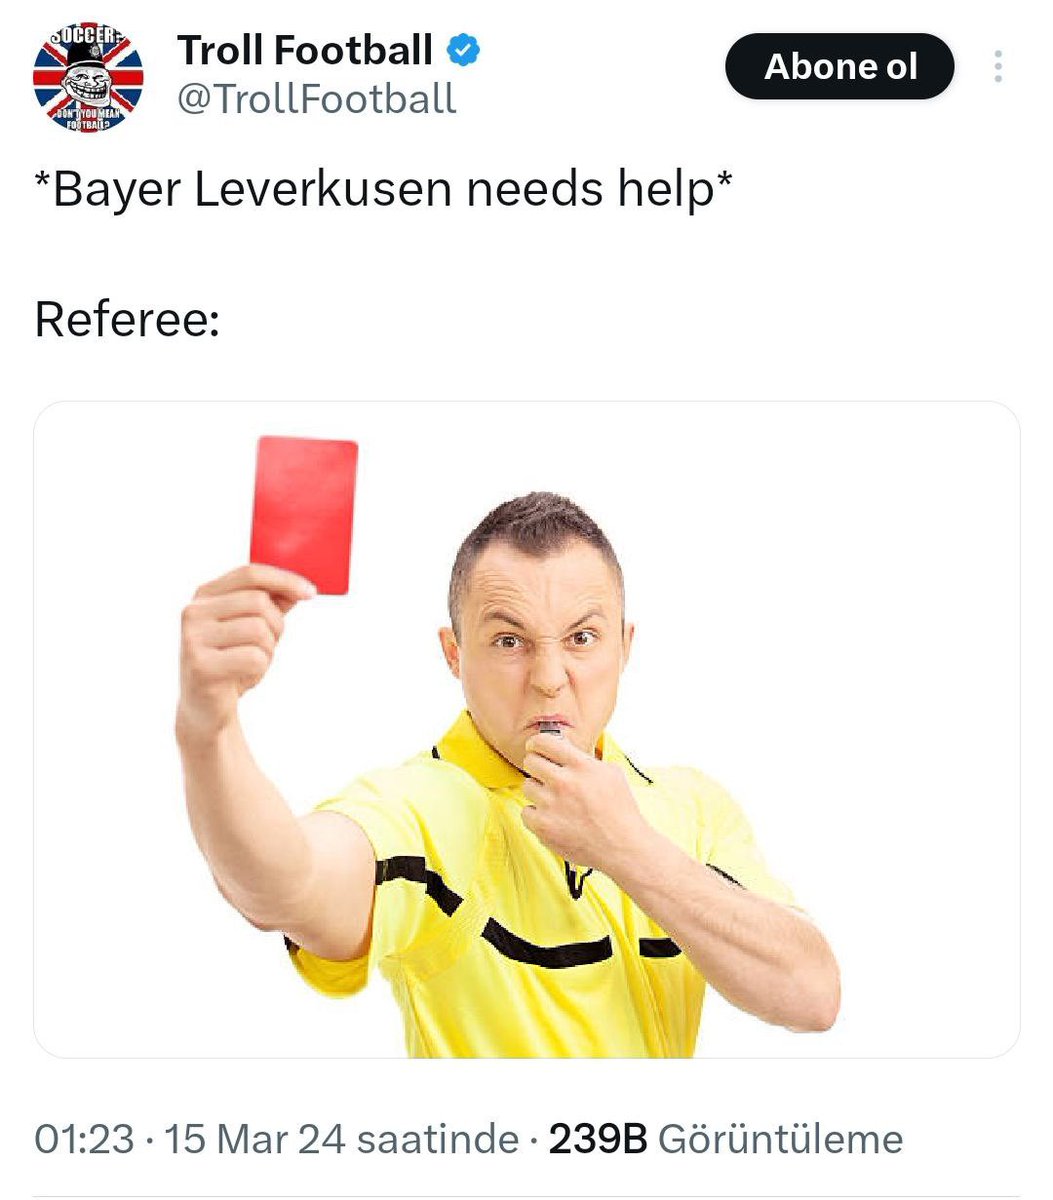 “#Bayer #Leverkusen needs help.” @TrollFootball